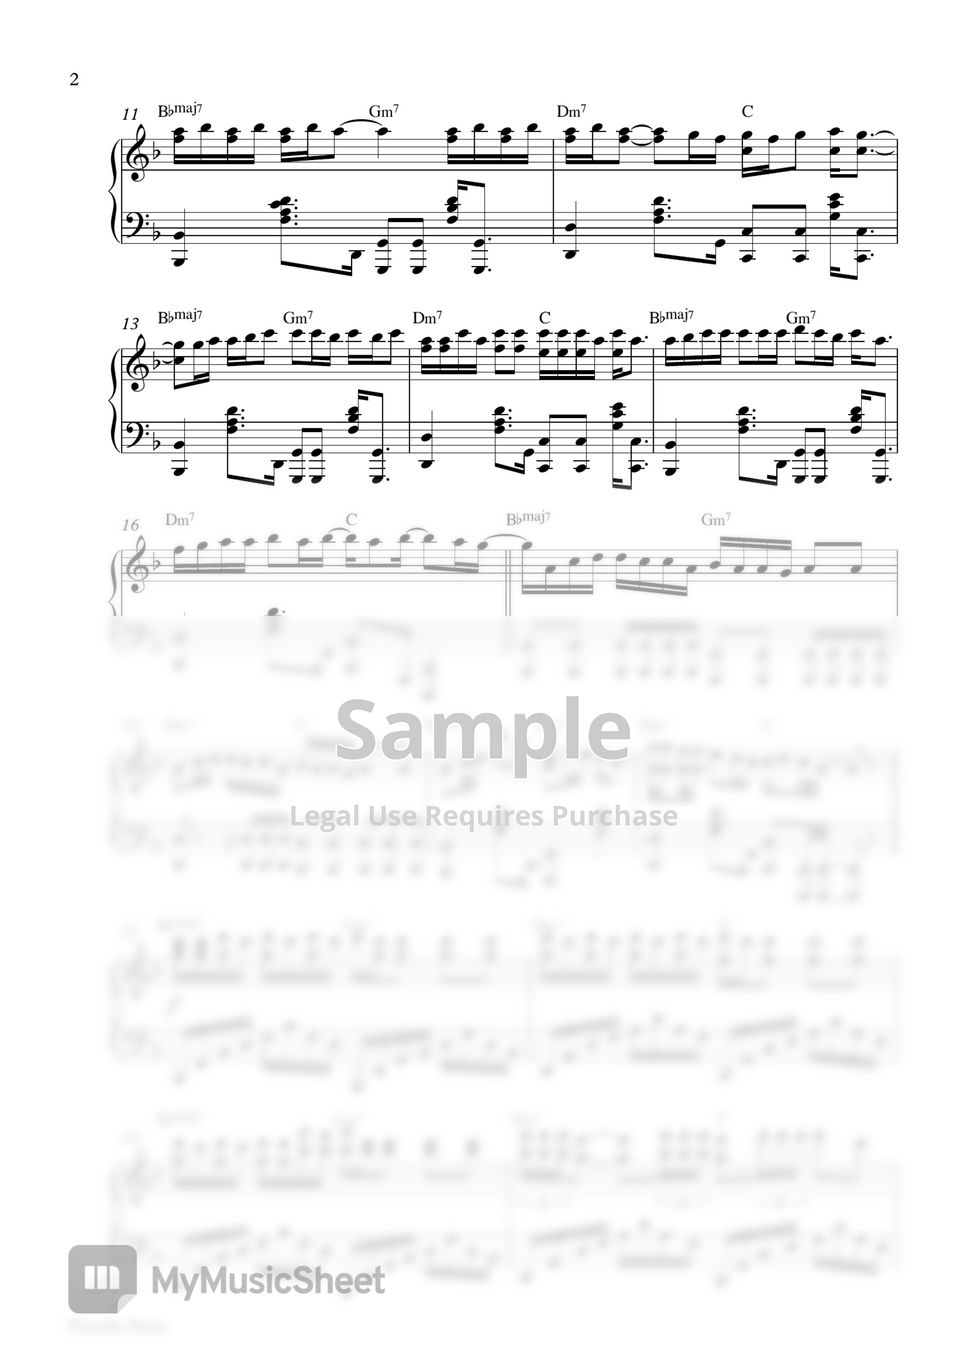 BTS - Black Swan (Piano Sheet) by Pianella Piano